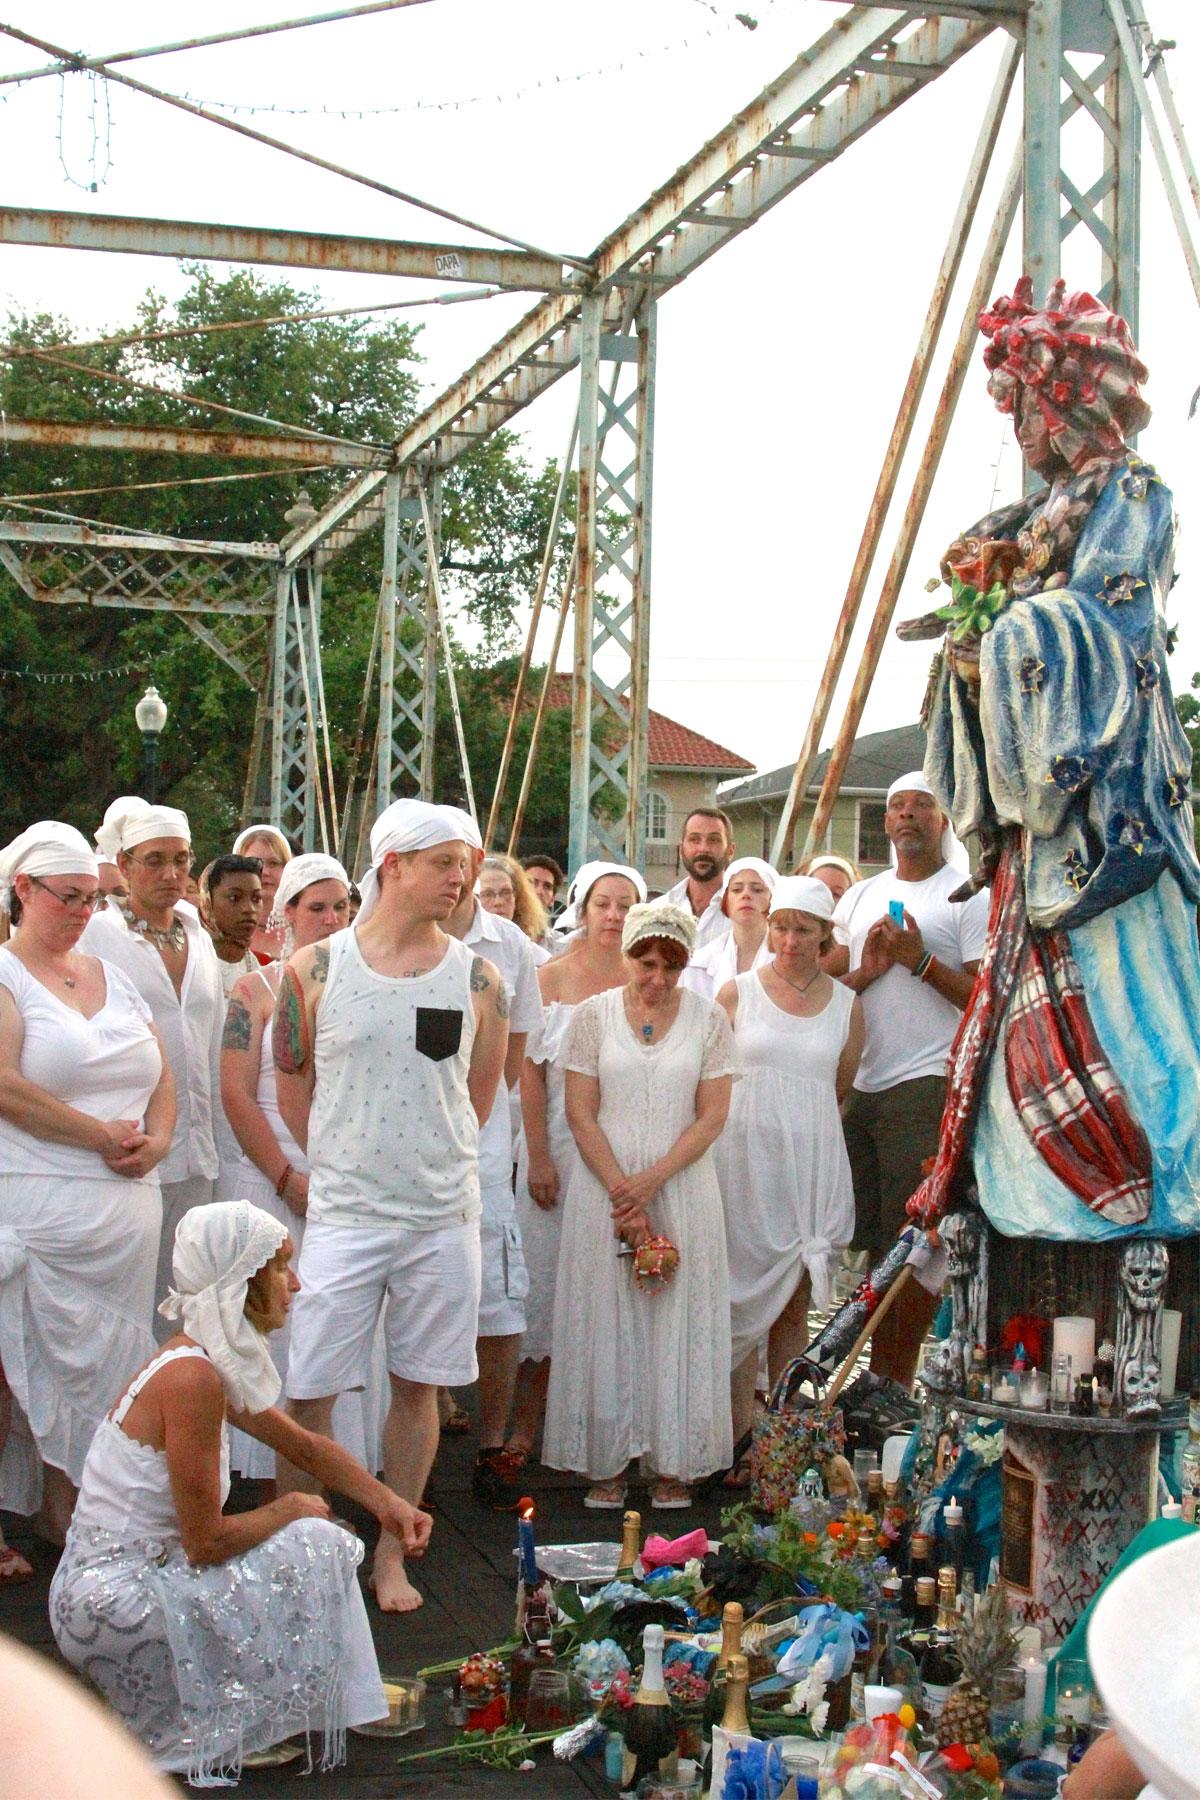 How to Participate in Voodoo (Vodou) Ceremonies in New Orleans